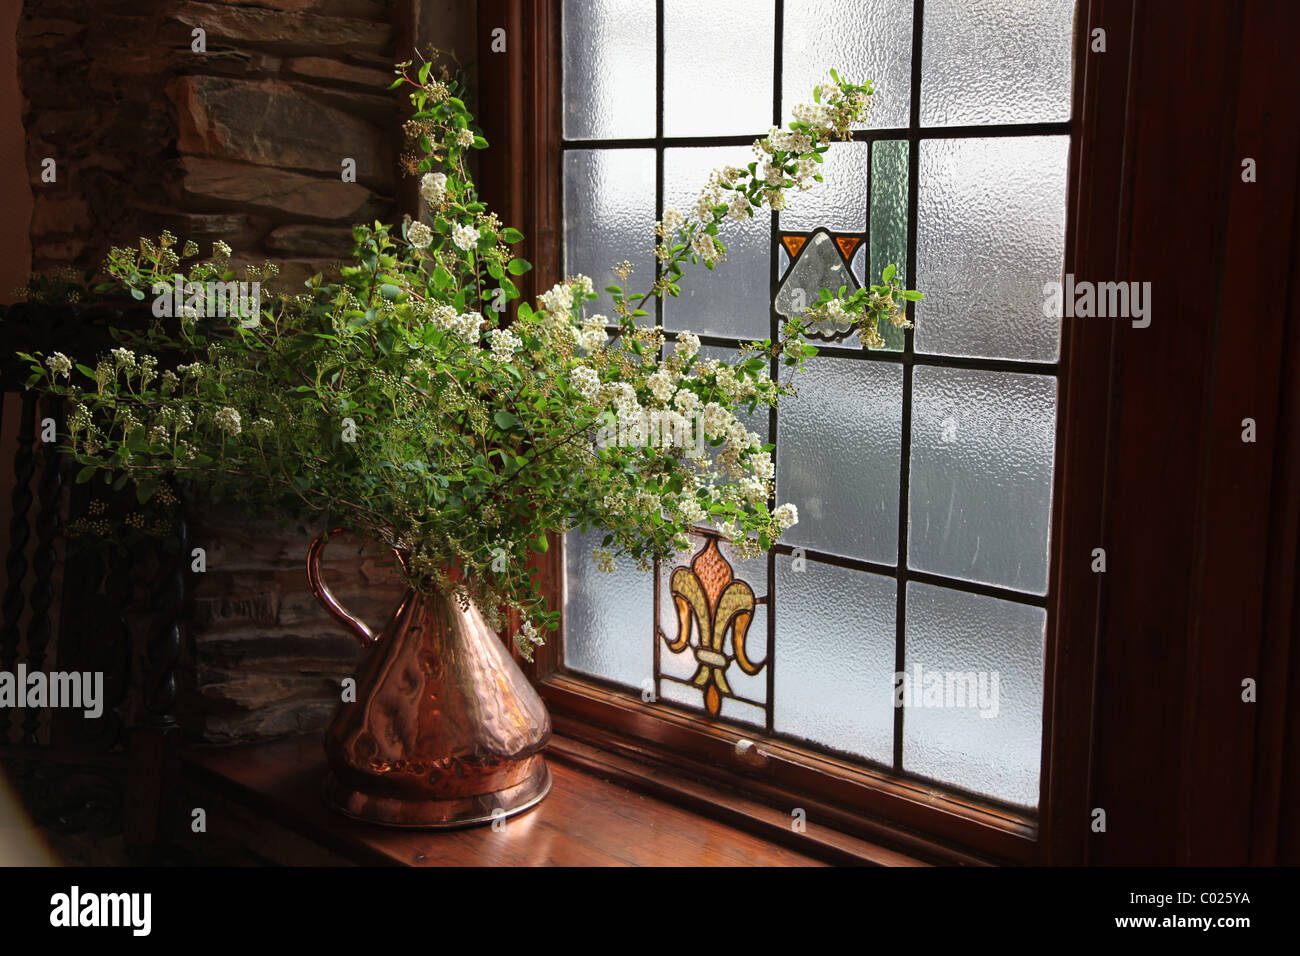 Flower display in brass vase on window sill Stock Photo